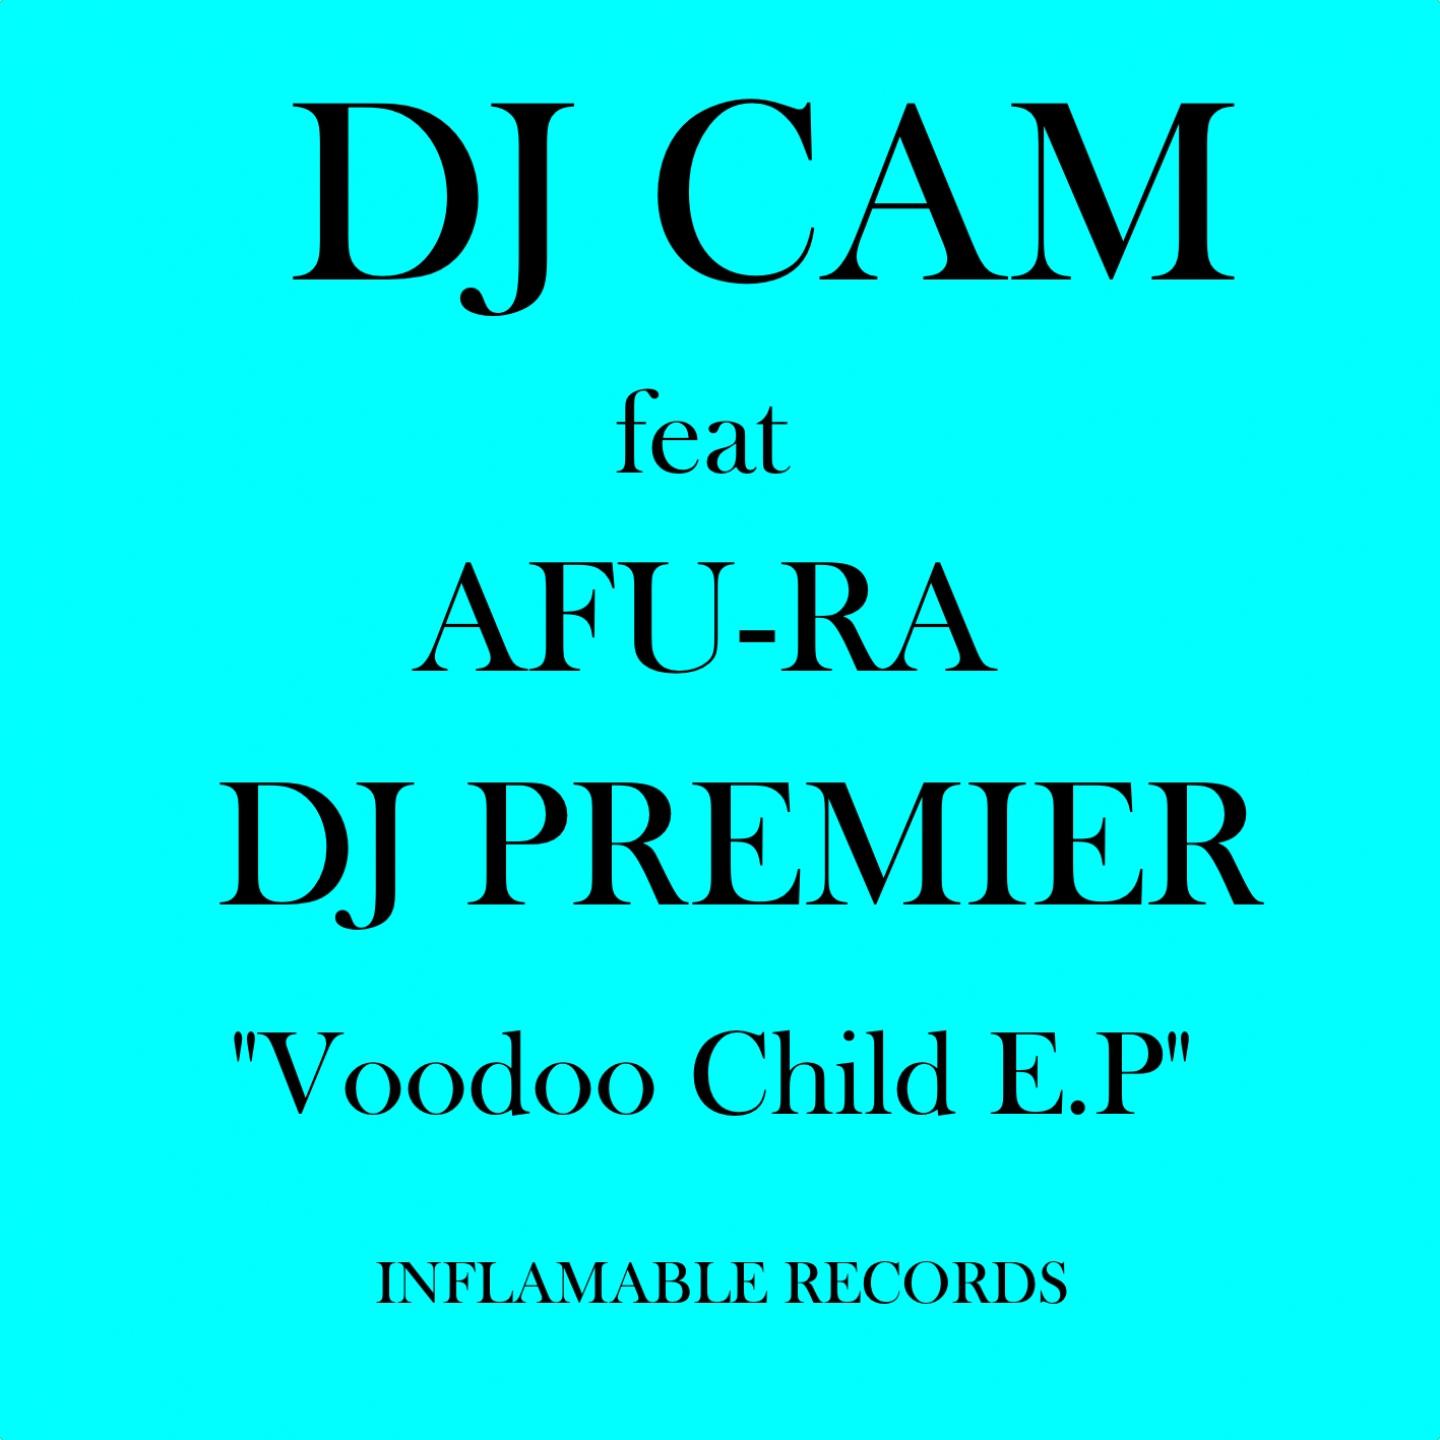 Voodoo Child (DJ Cam Version)